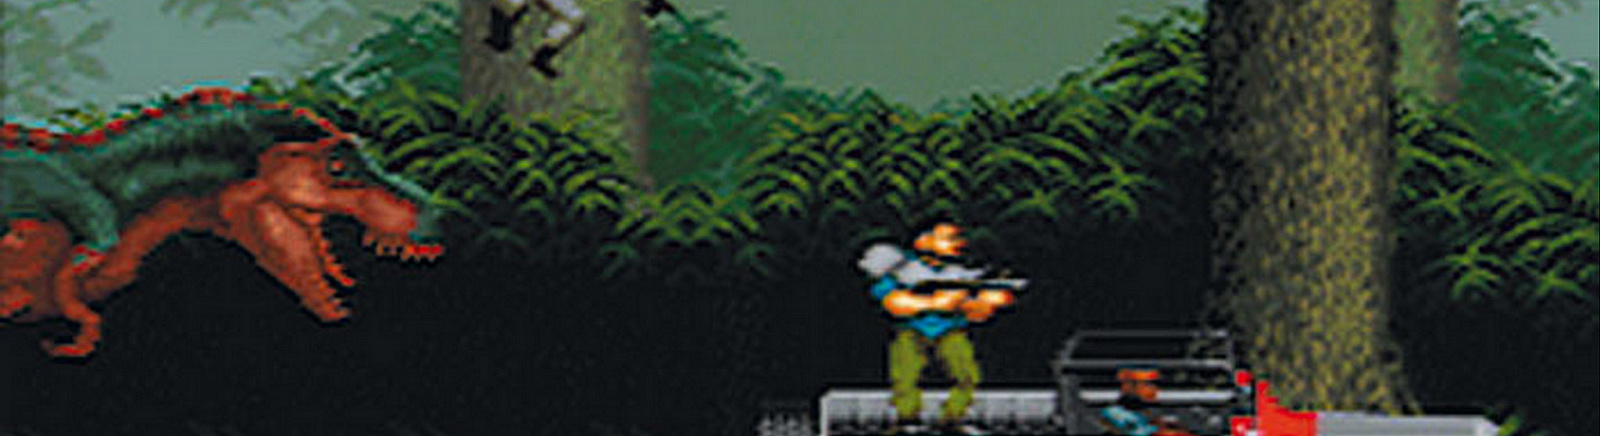 Дата выхода Jurassic Park Part 2: The Chaos Continues (Jurassic Park 2)  на SNES и Game Boy в России и во всем мире